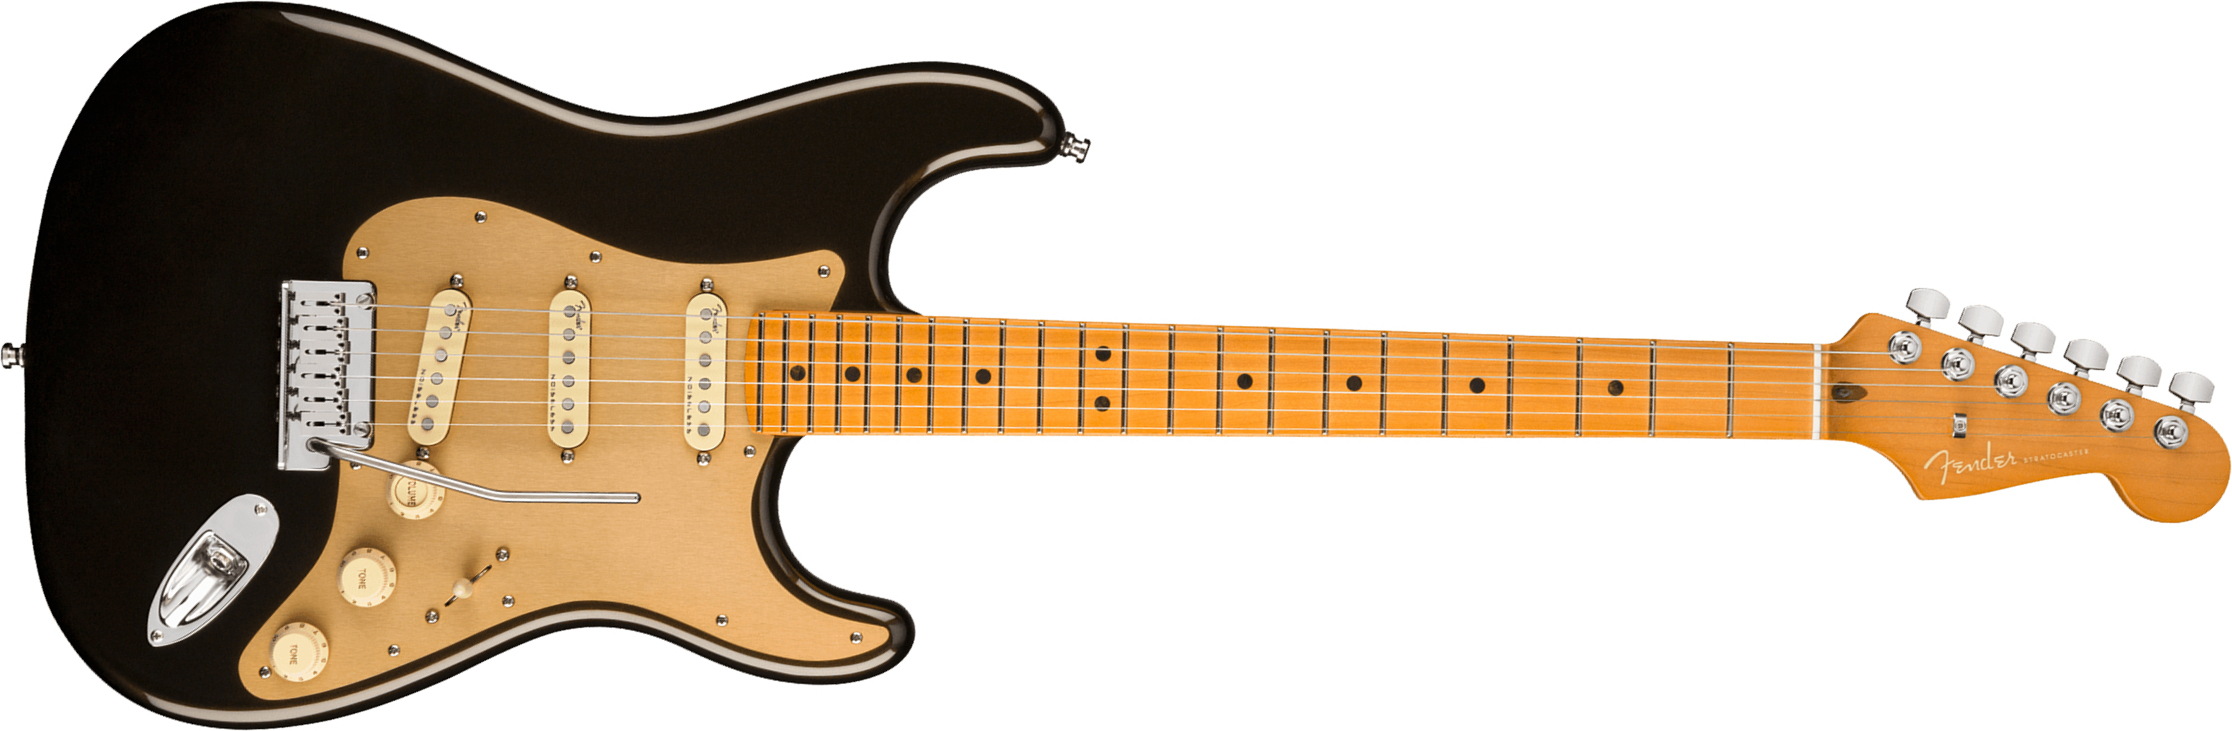 Fender Strat American Ultra 2019 Usa Mn - Texas Tea - Str shape electric guitar - Main picture